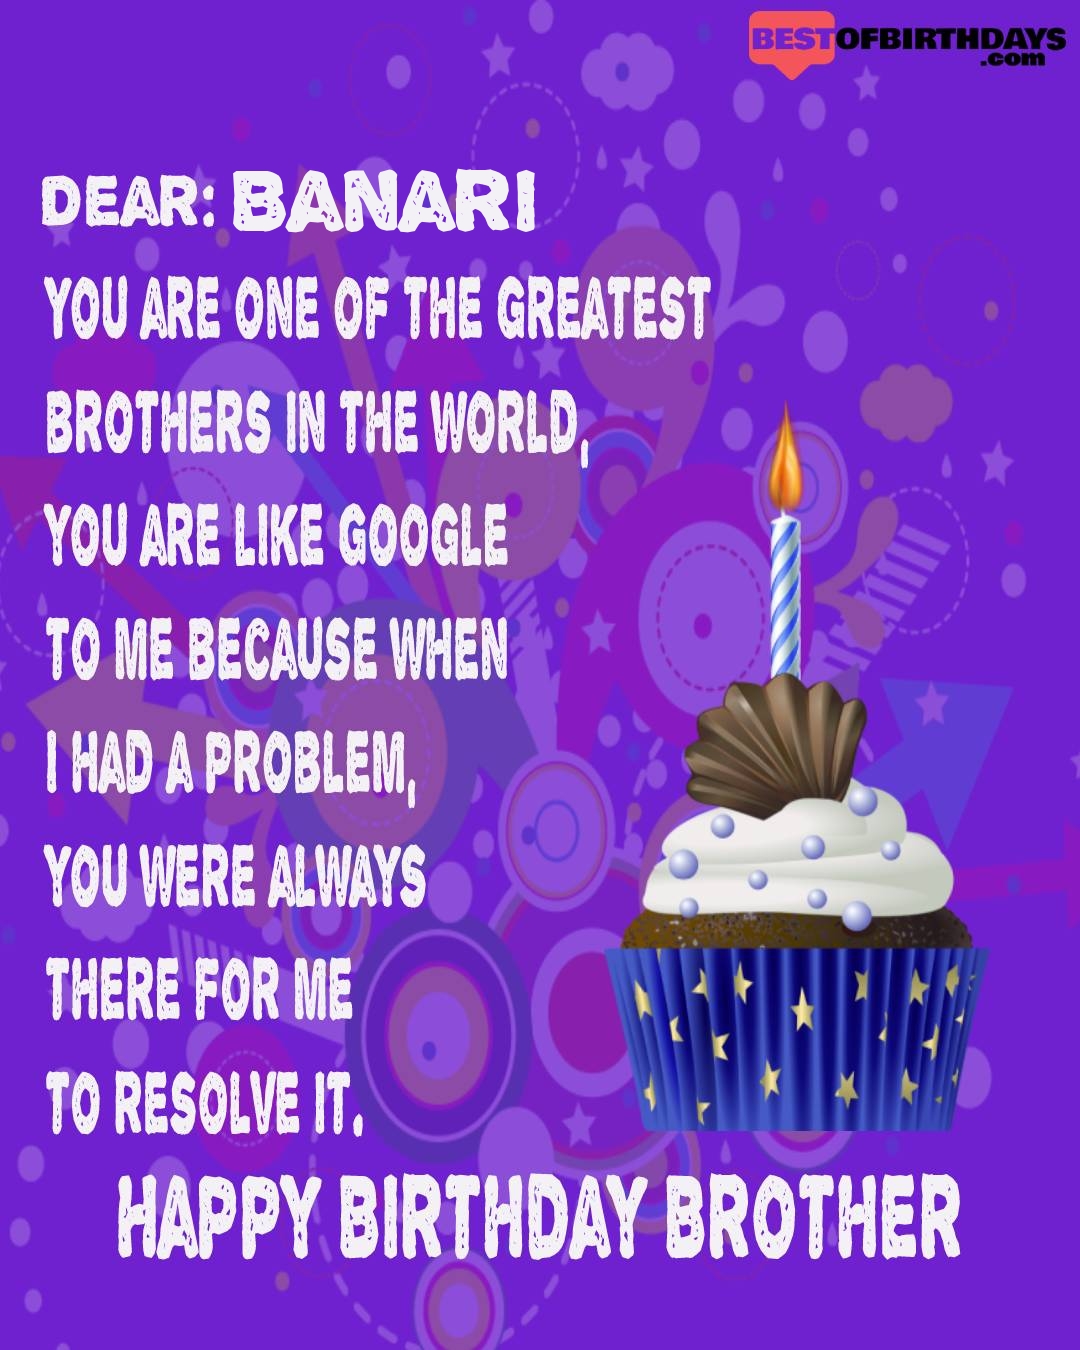 Happy birthday banari bhai brother bro